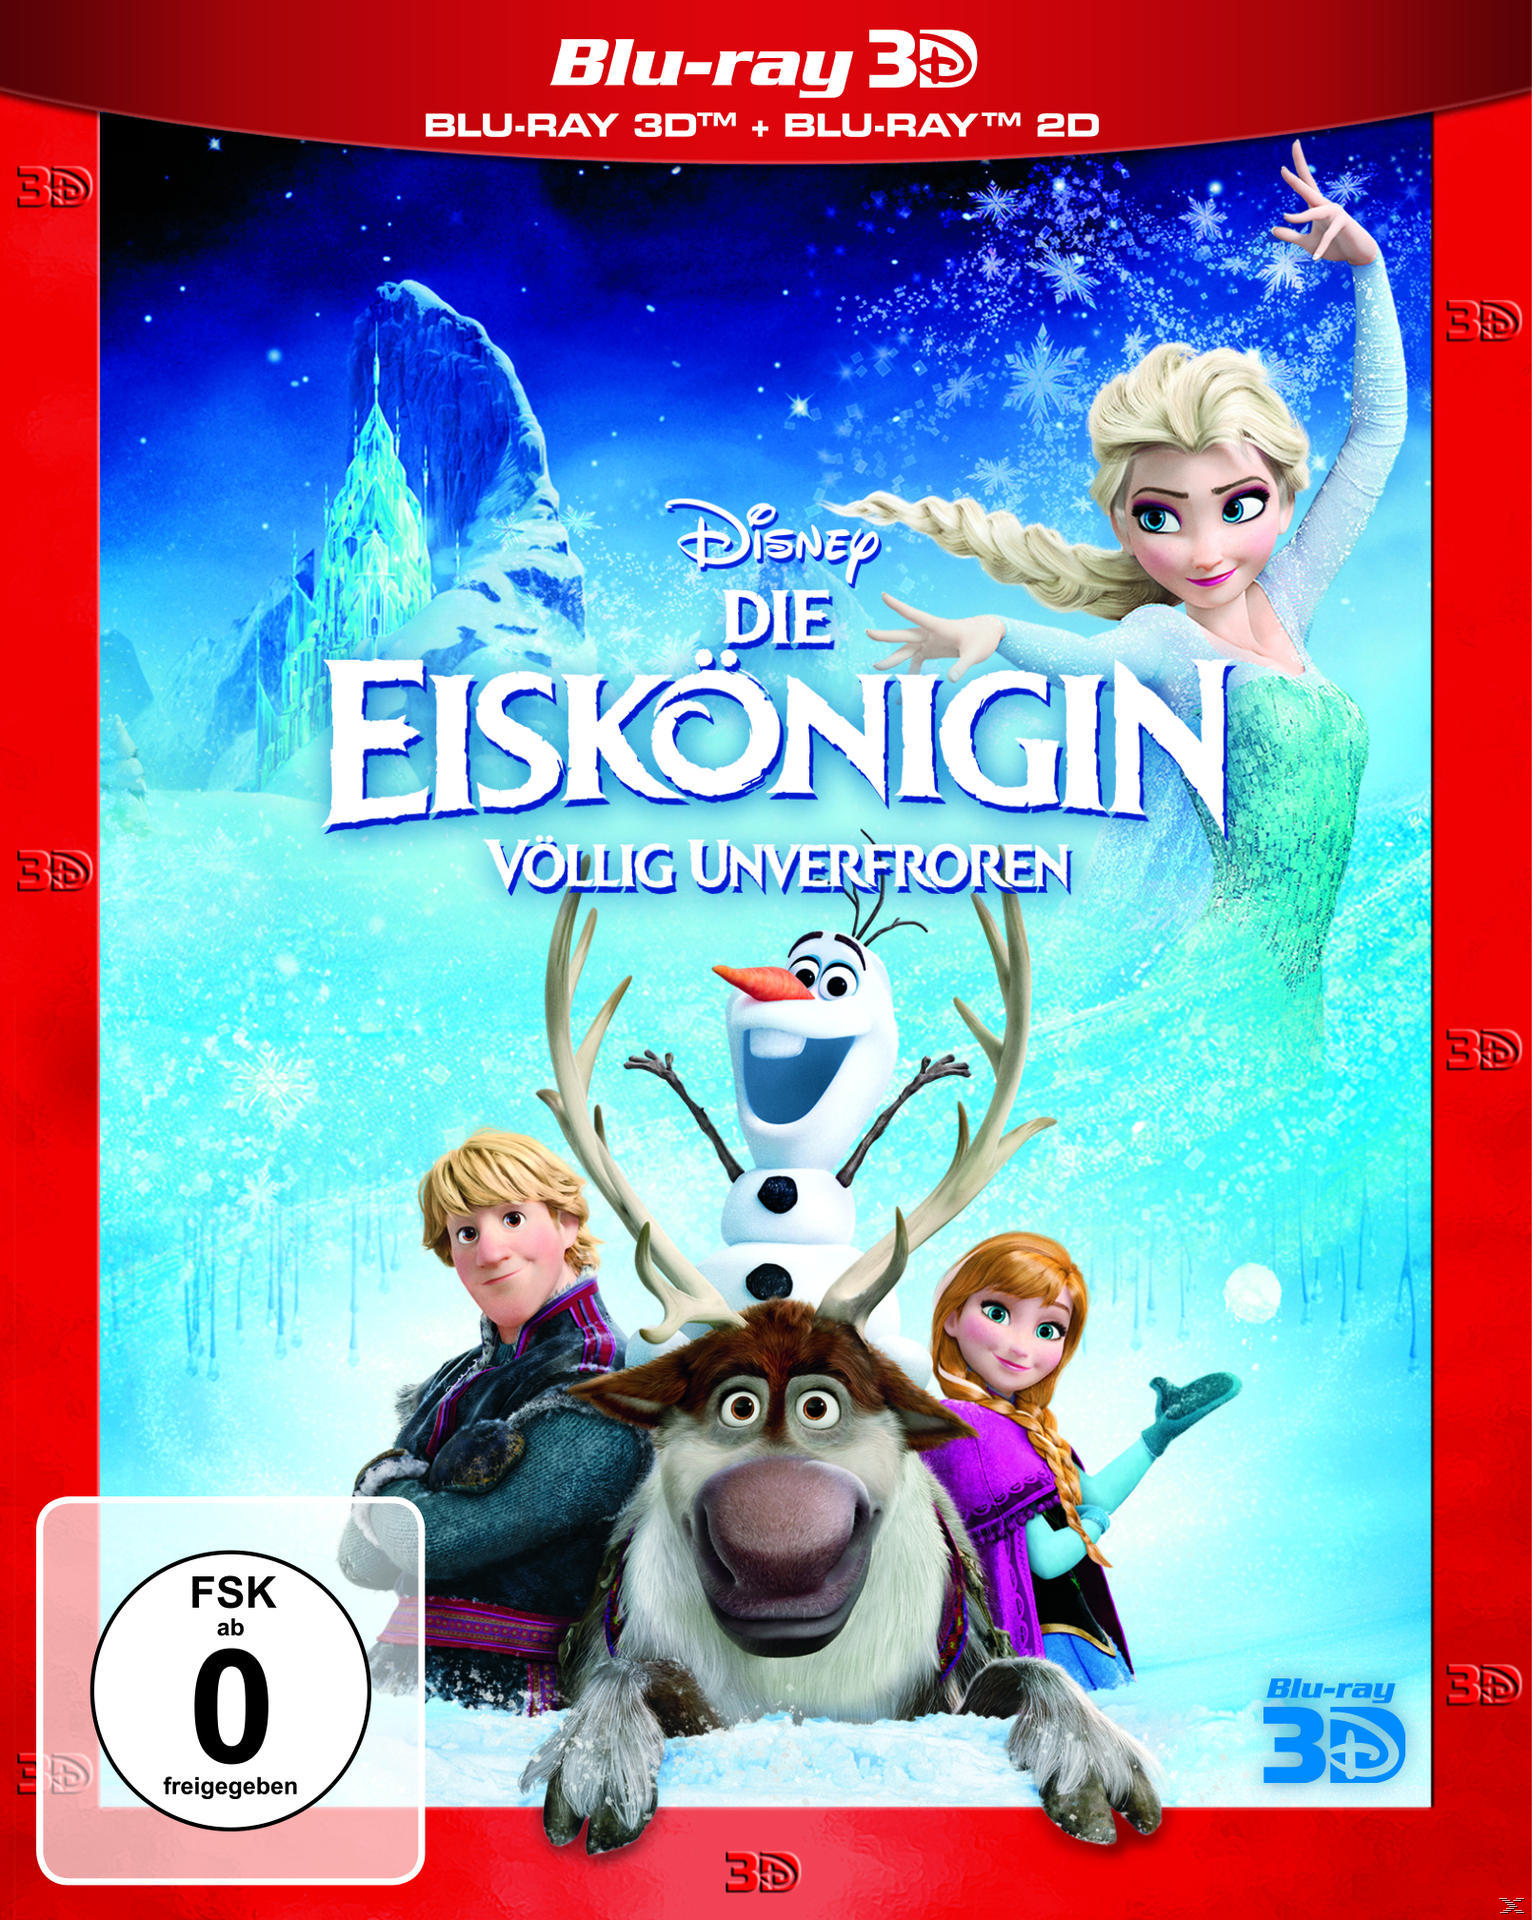 Die Eiskönigin (Blu-ray) & Blu-ray 3D 3D BD 2D